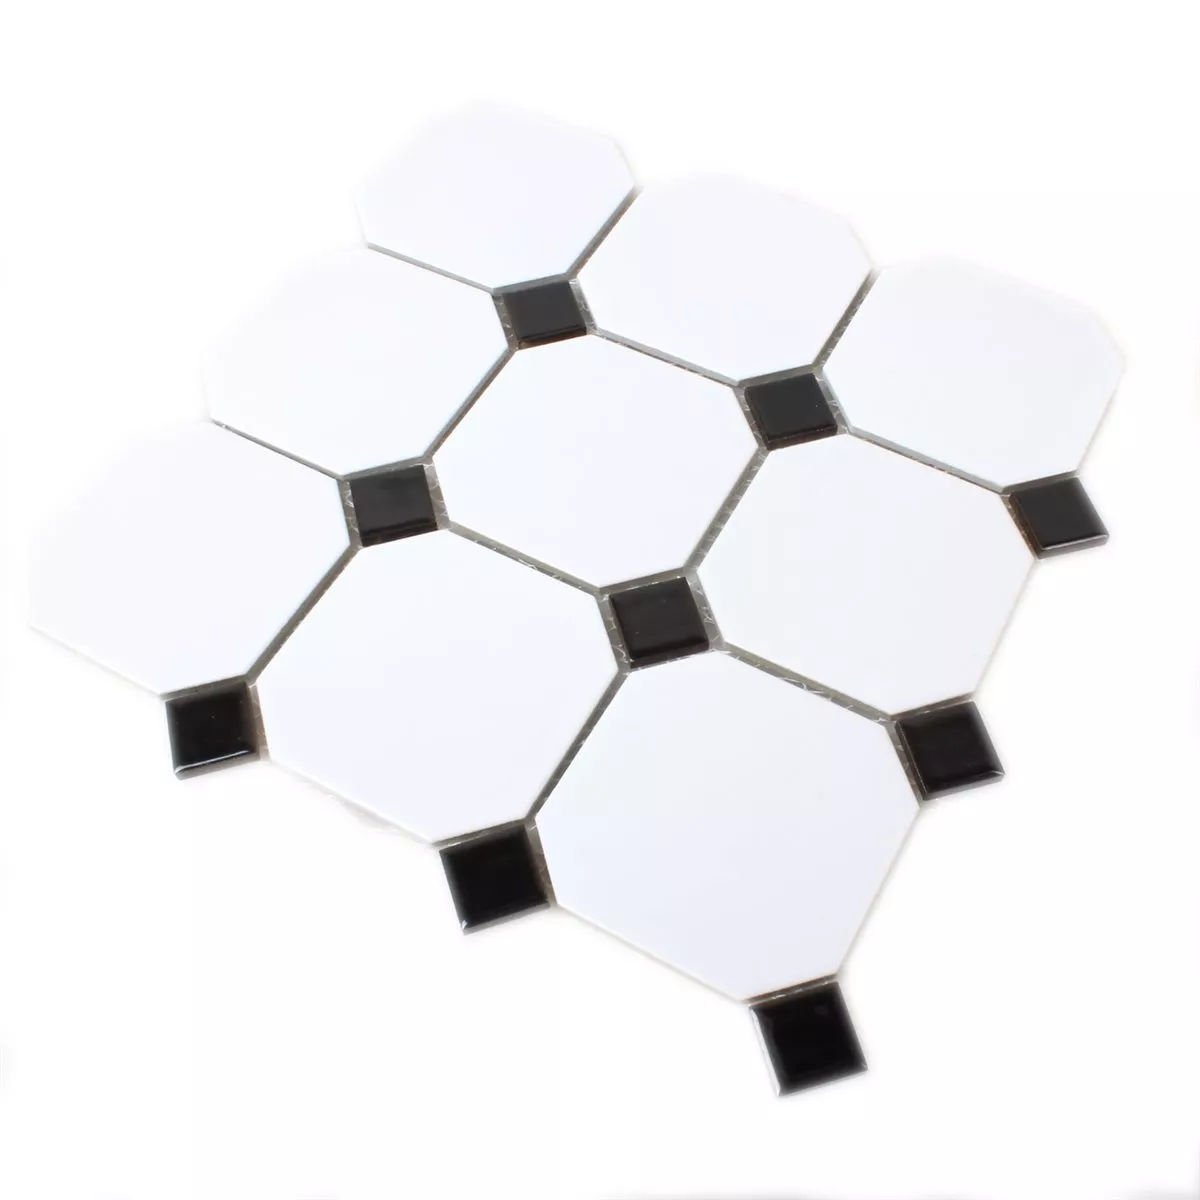 Sample Mosaic Tiles Ceramic Octagon White Black Mix